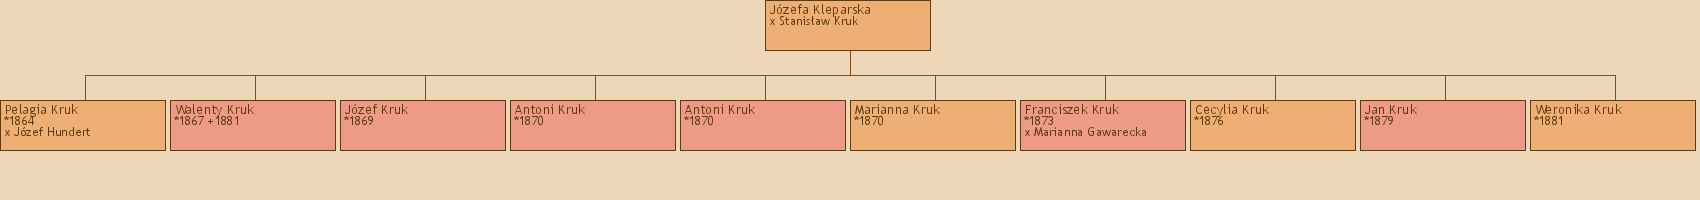 Drzewo genealogiczne - Jzefa Kleparska